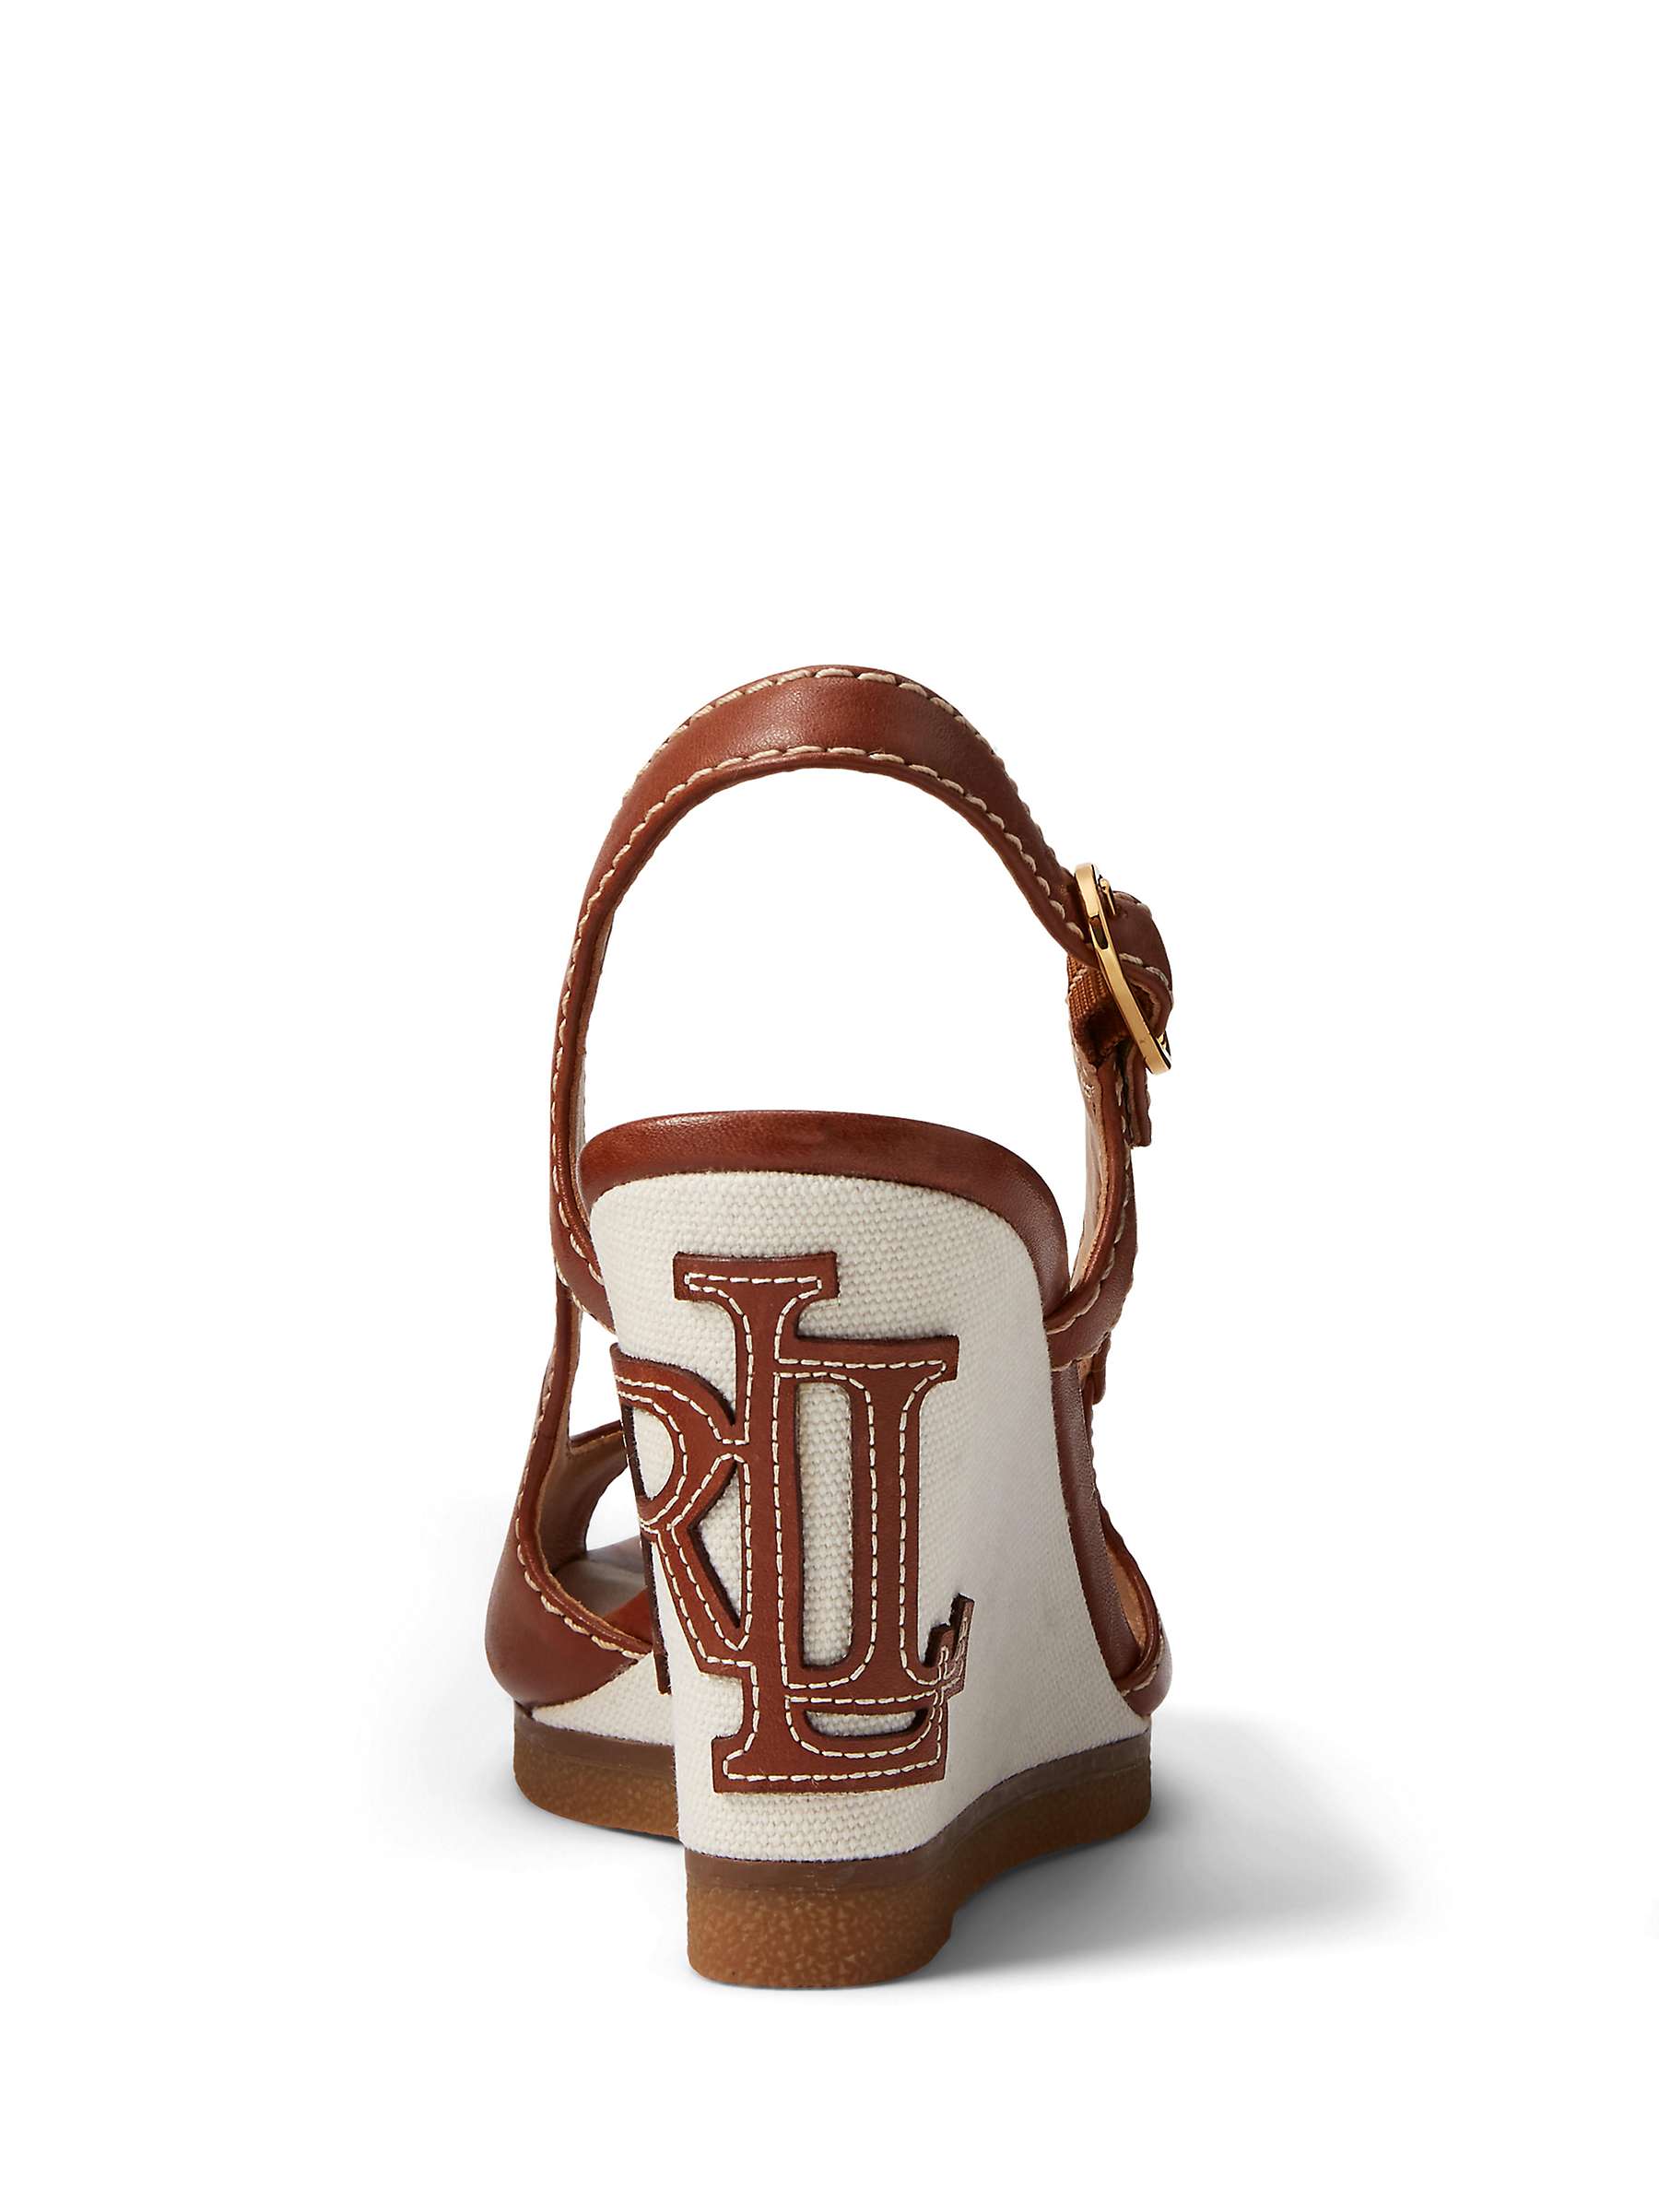 Buy Lauren Ralph Lauren Roni Leather Wedge Sandal Online at johnlewis.com